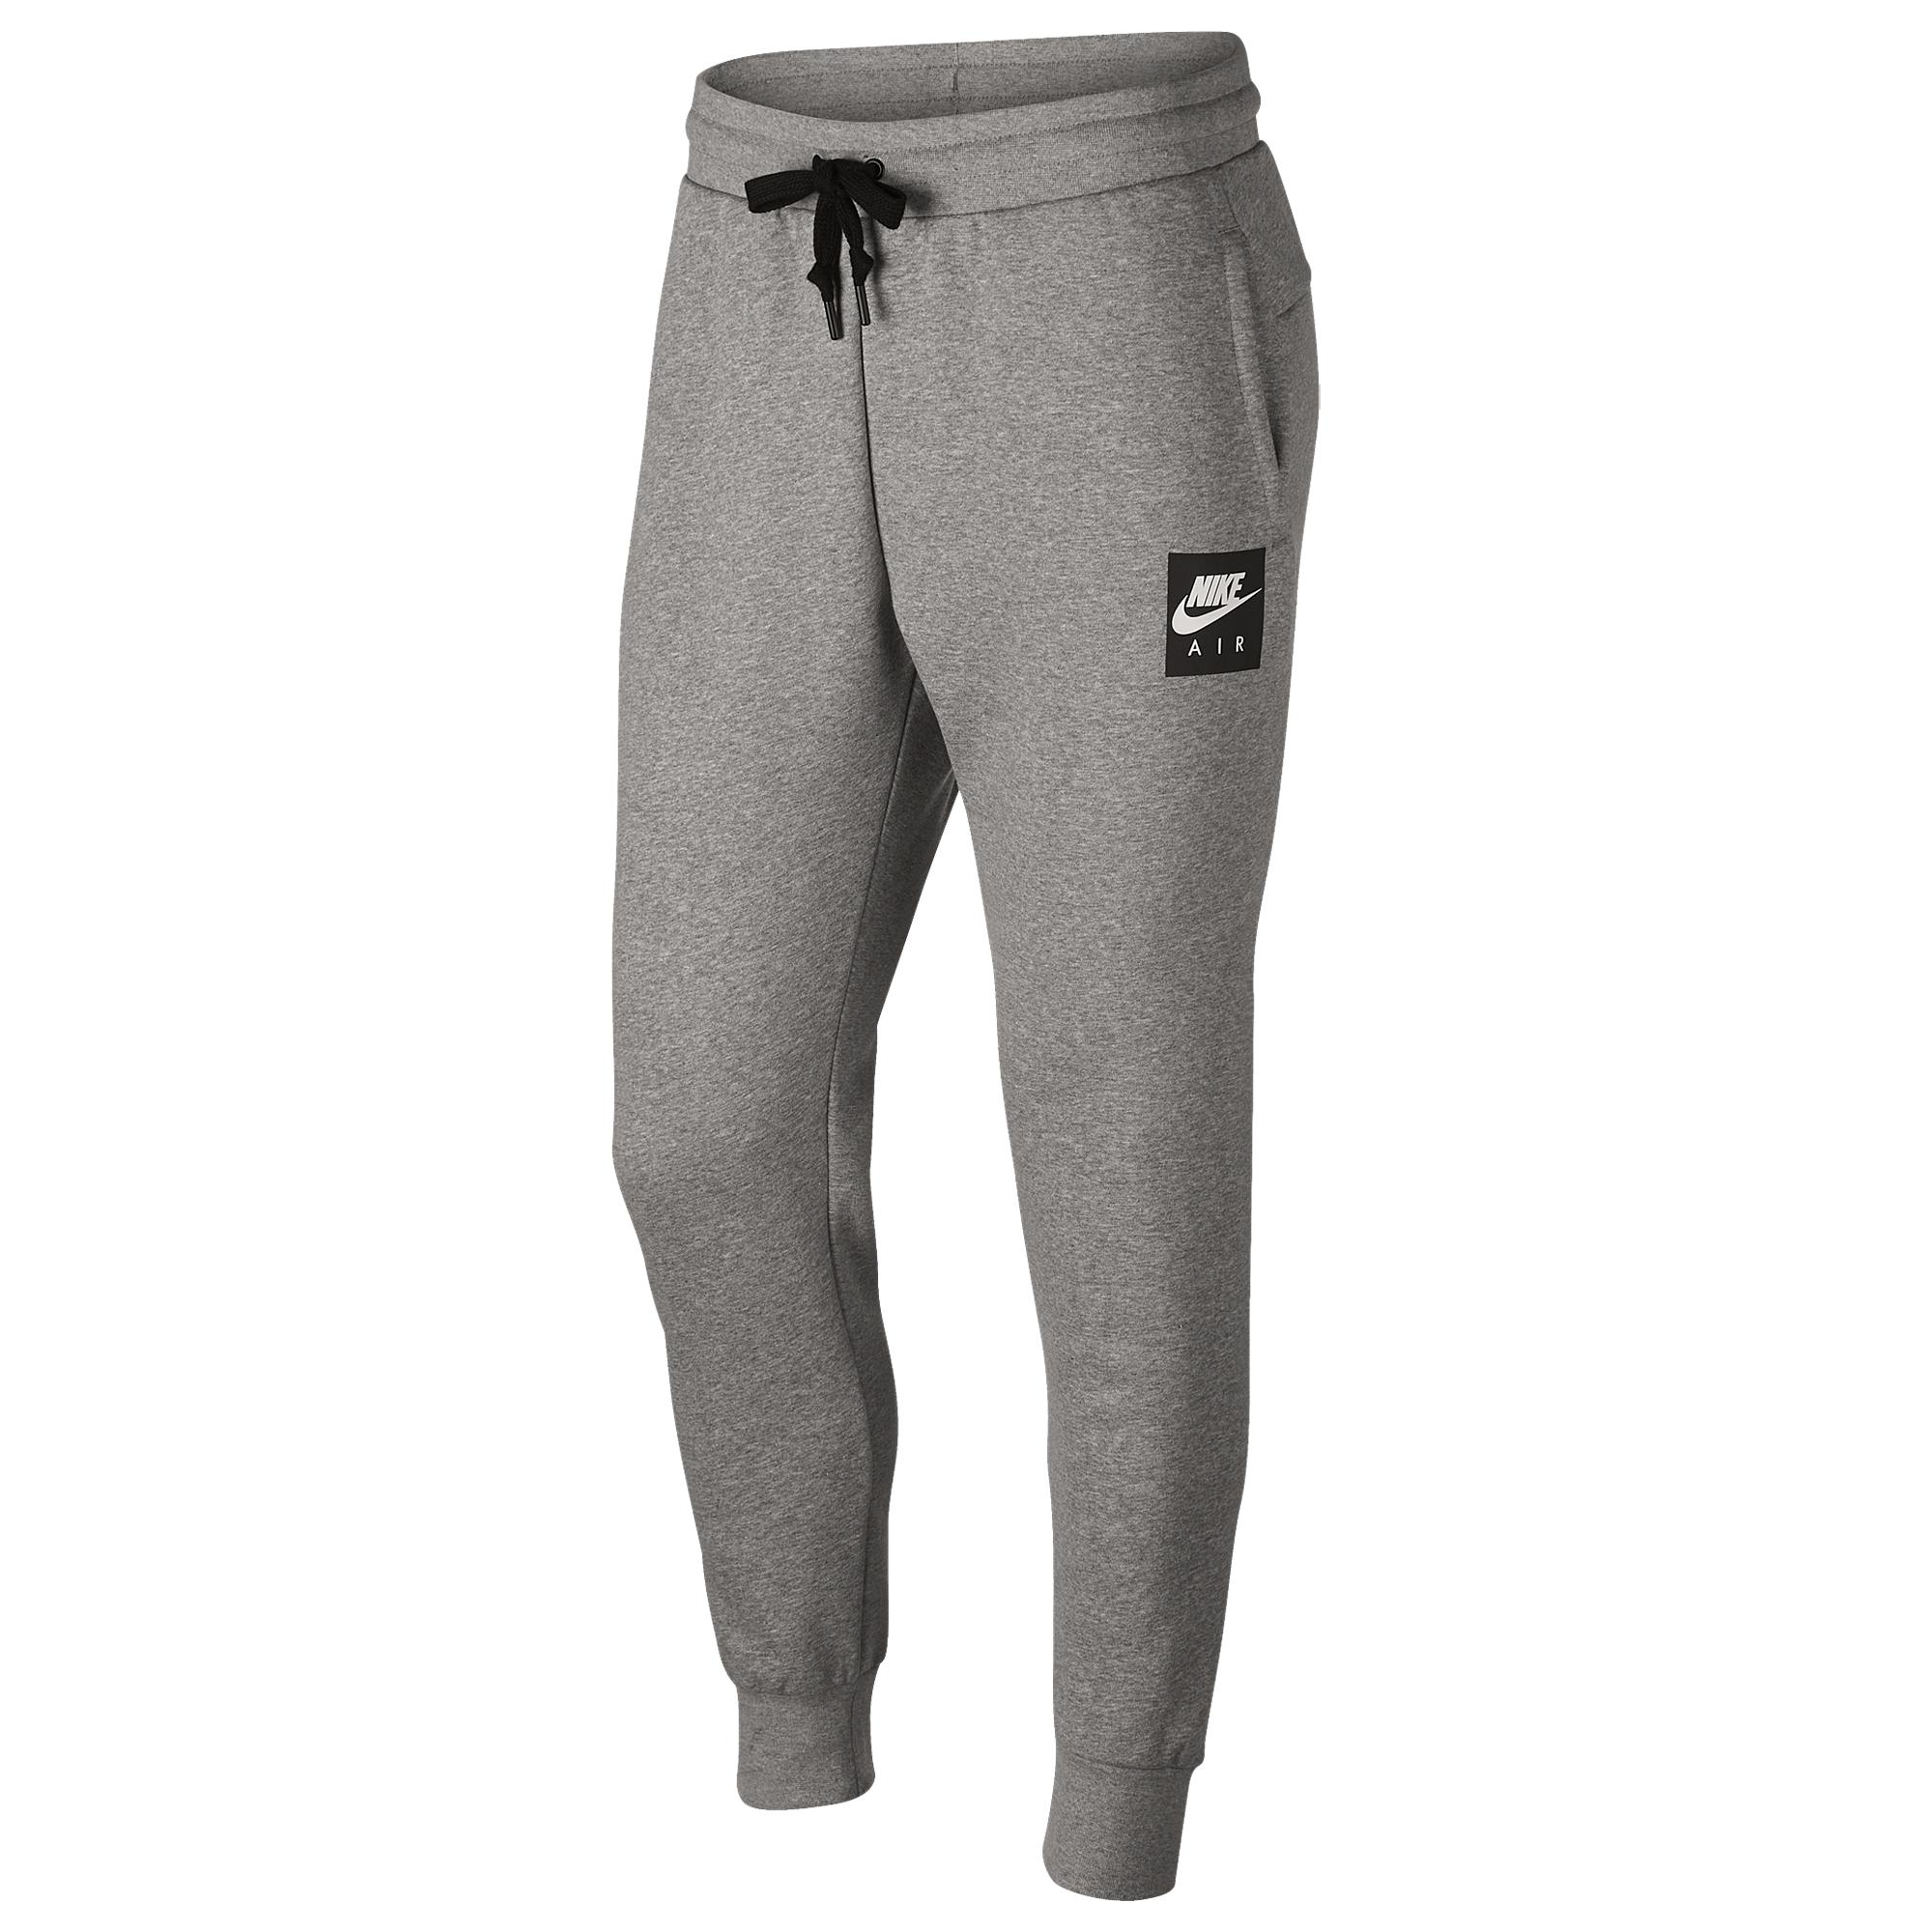 Nike Air Fleece Pants in Gray for Men - Lyst